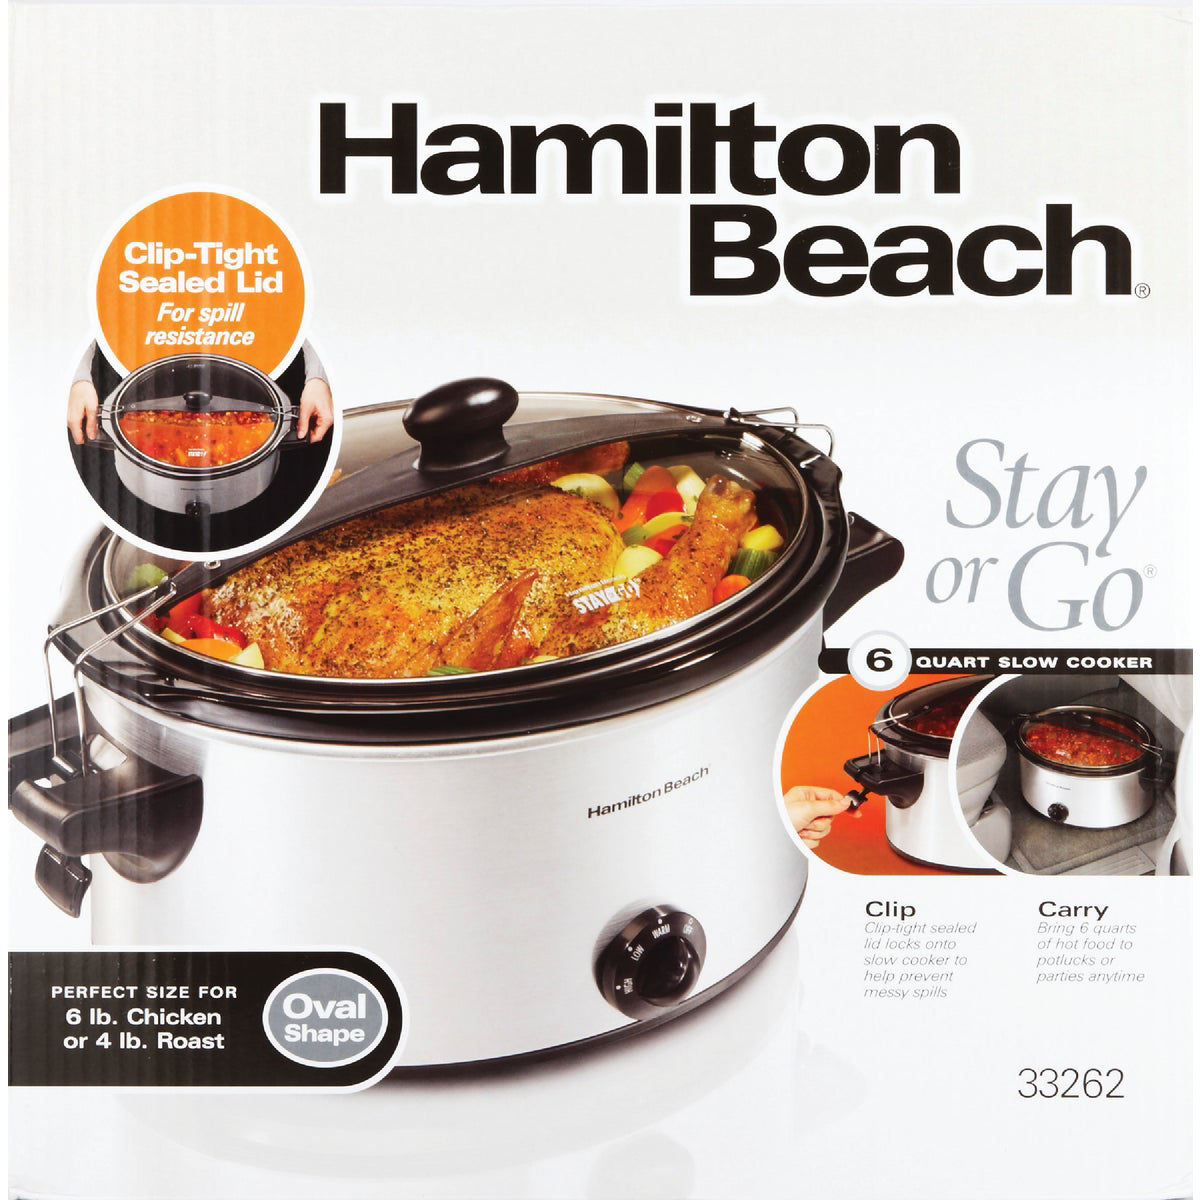 Hamilton Beach Stay or Go 4 Quart Slow Cooker